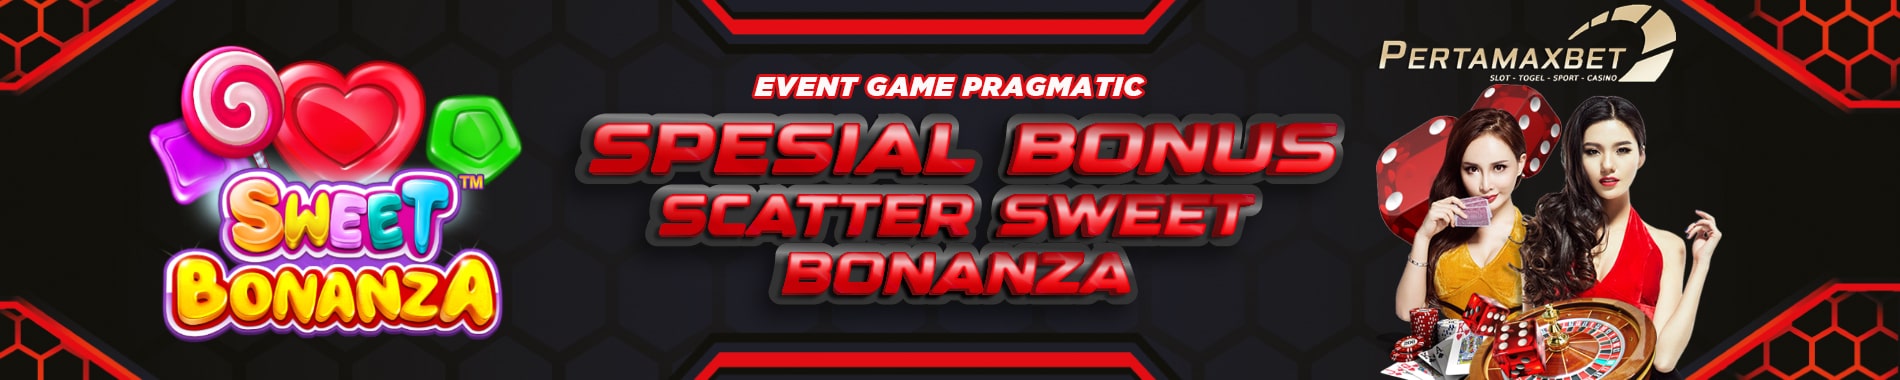 EVENT SCATTER SWEET BONANZA